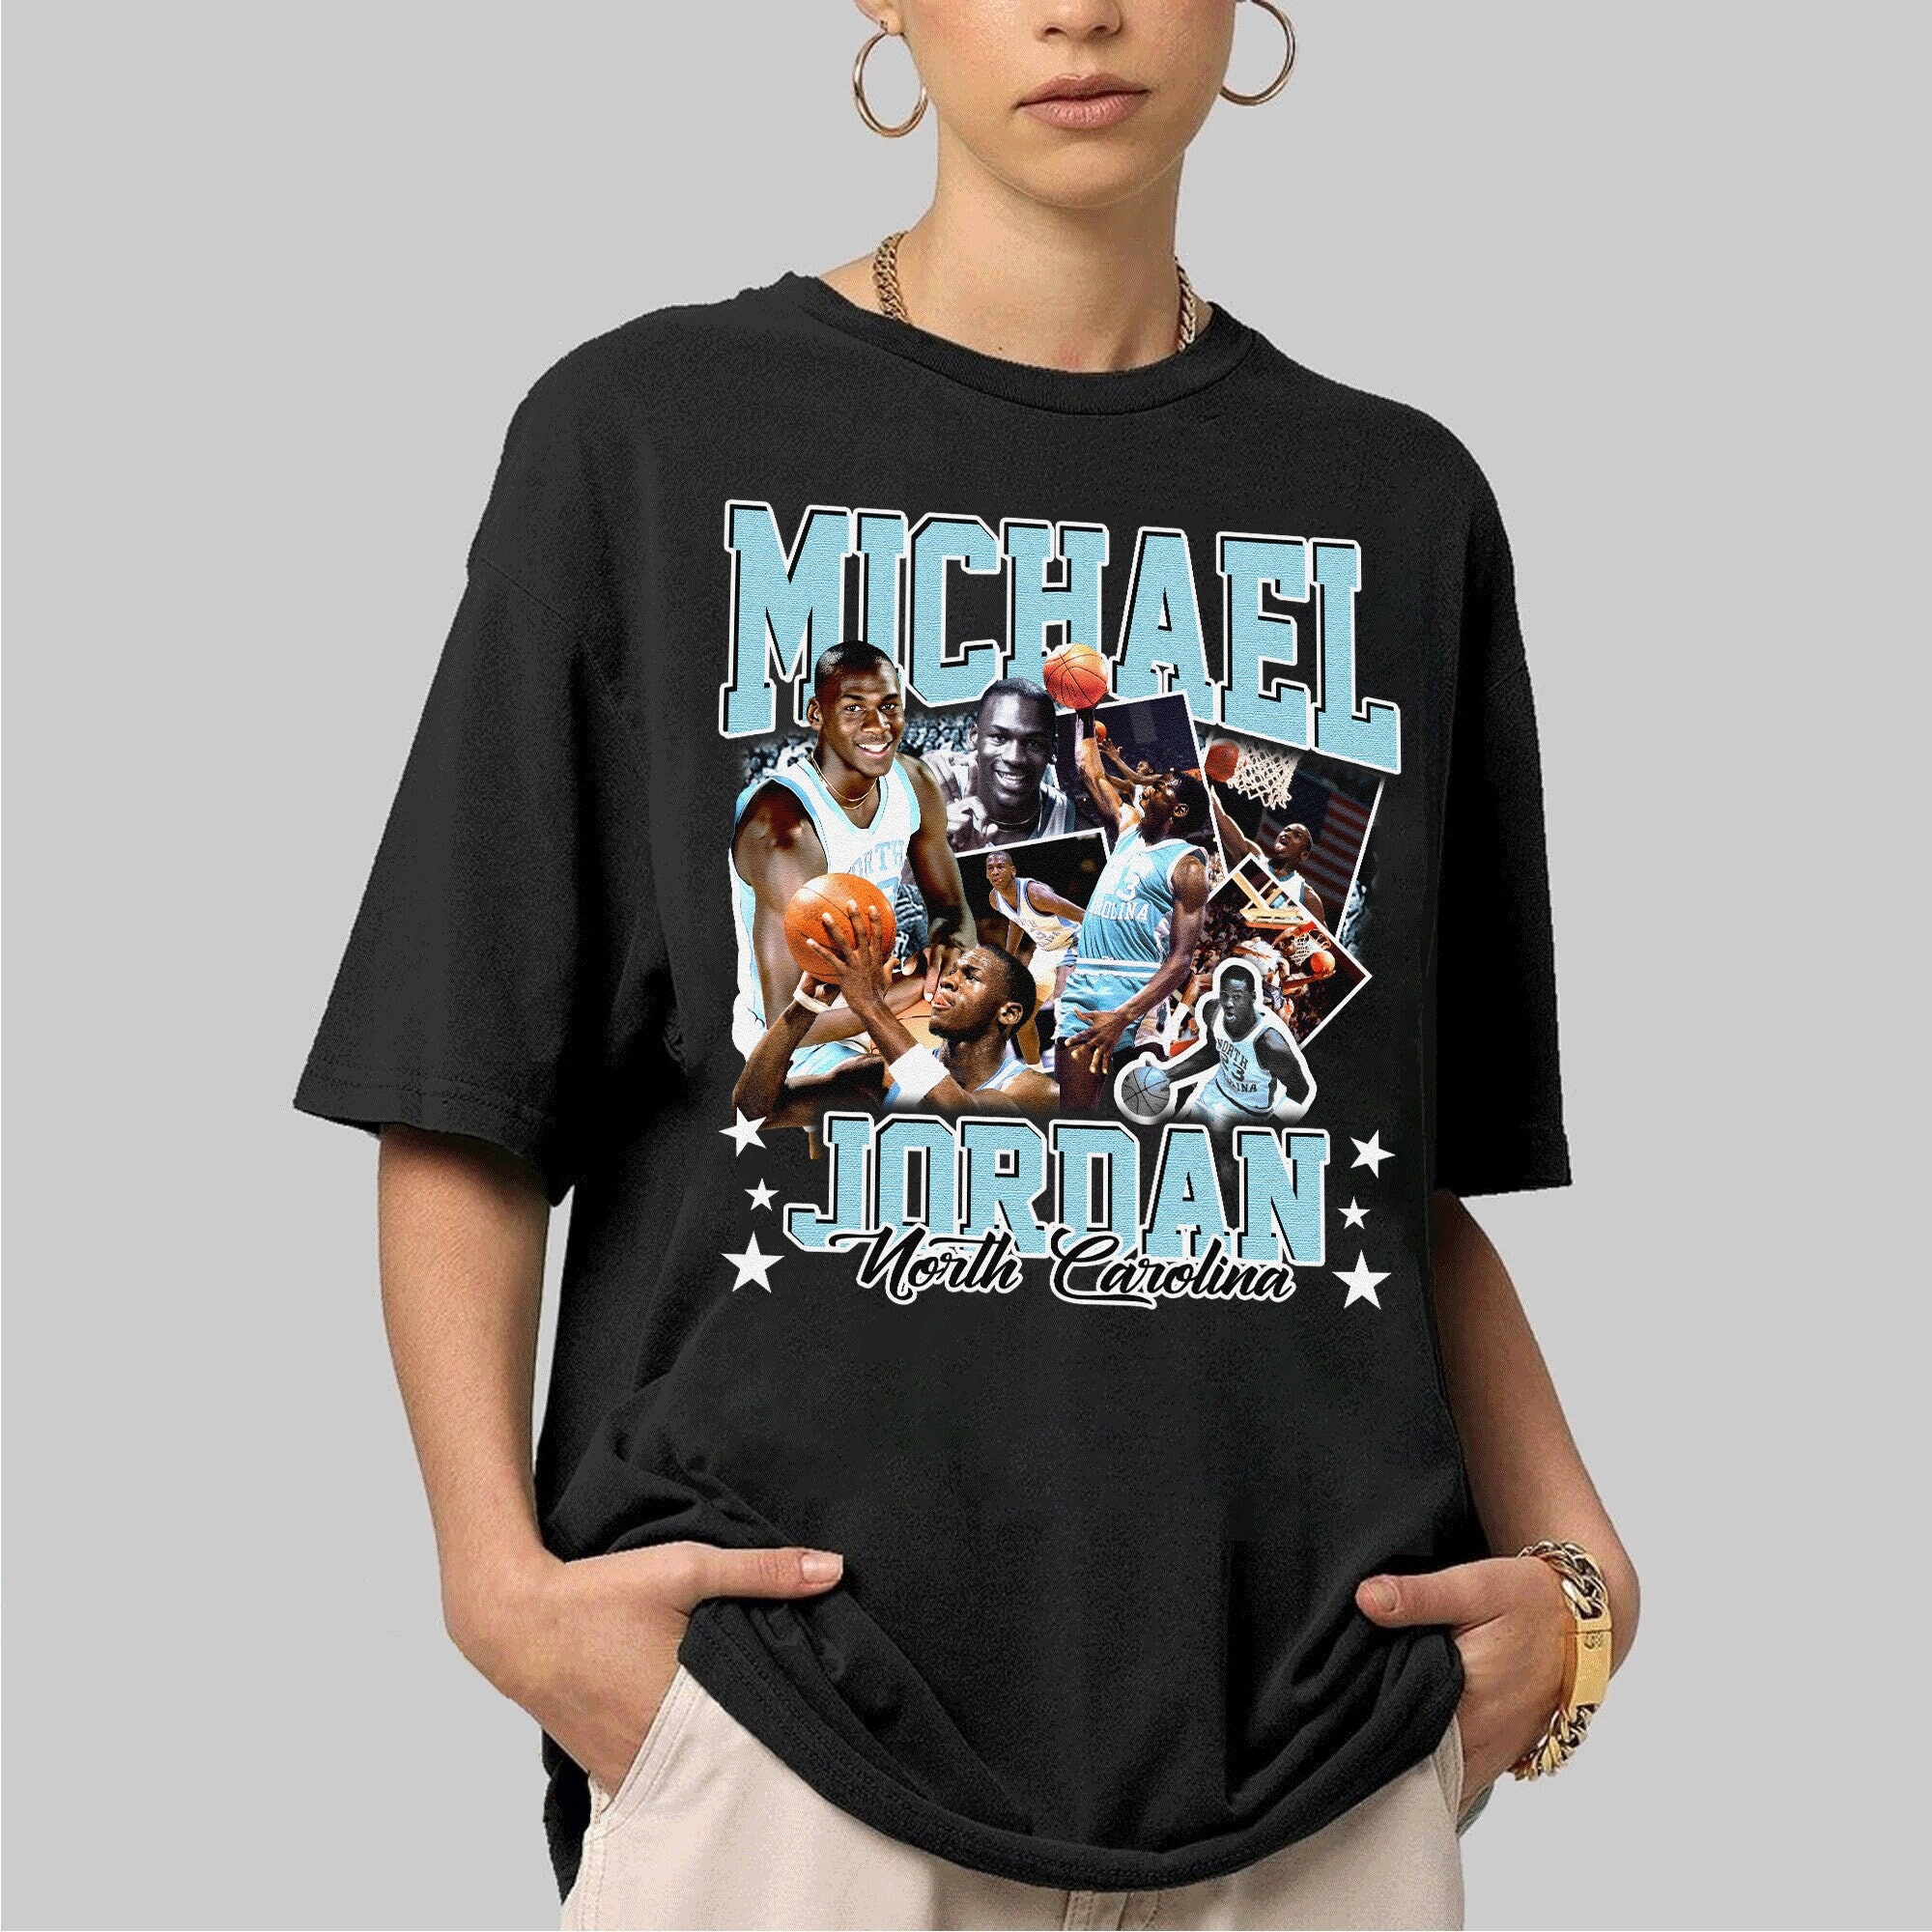 Vintage Nike Air Jordan Aj23 Tee Shirt 1990s Size Medium Made in USA